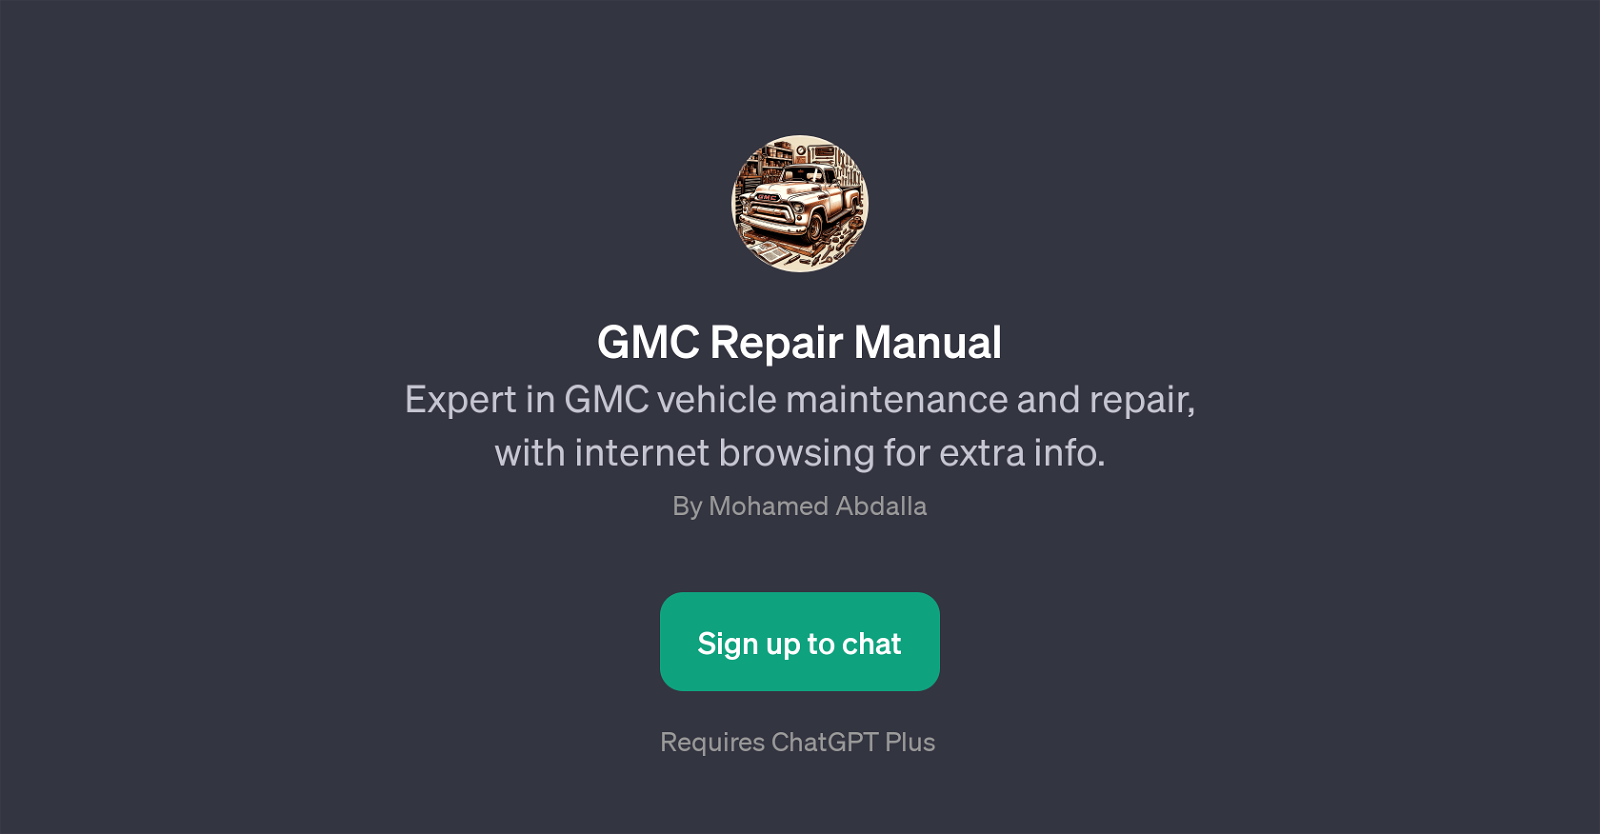 GMC Repair Manual website